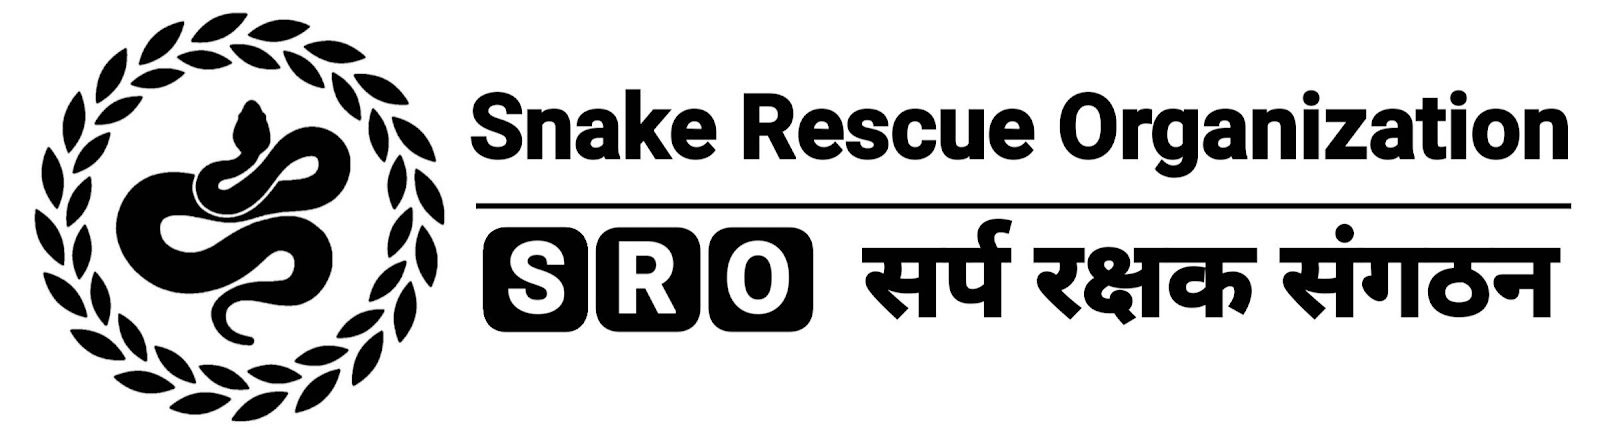 Snake Rescue Organization